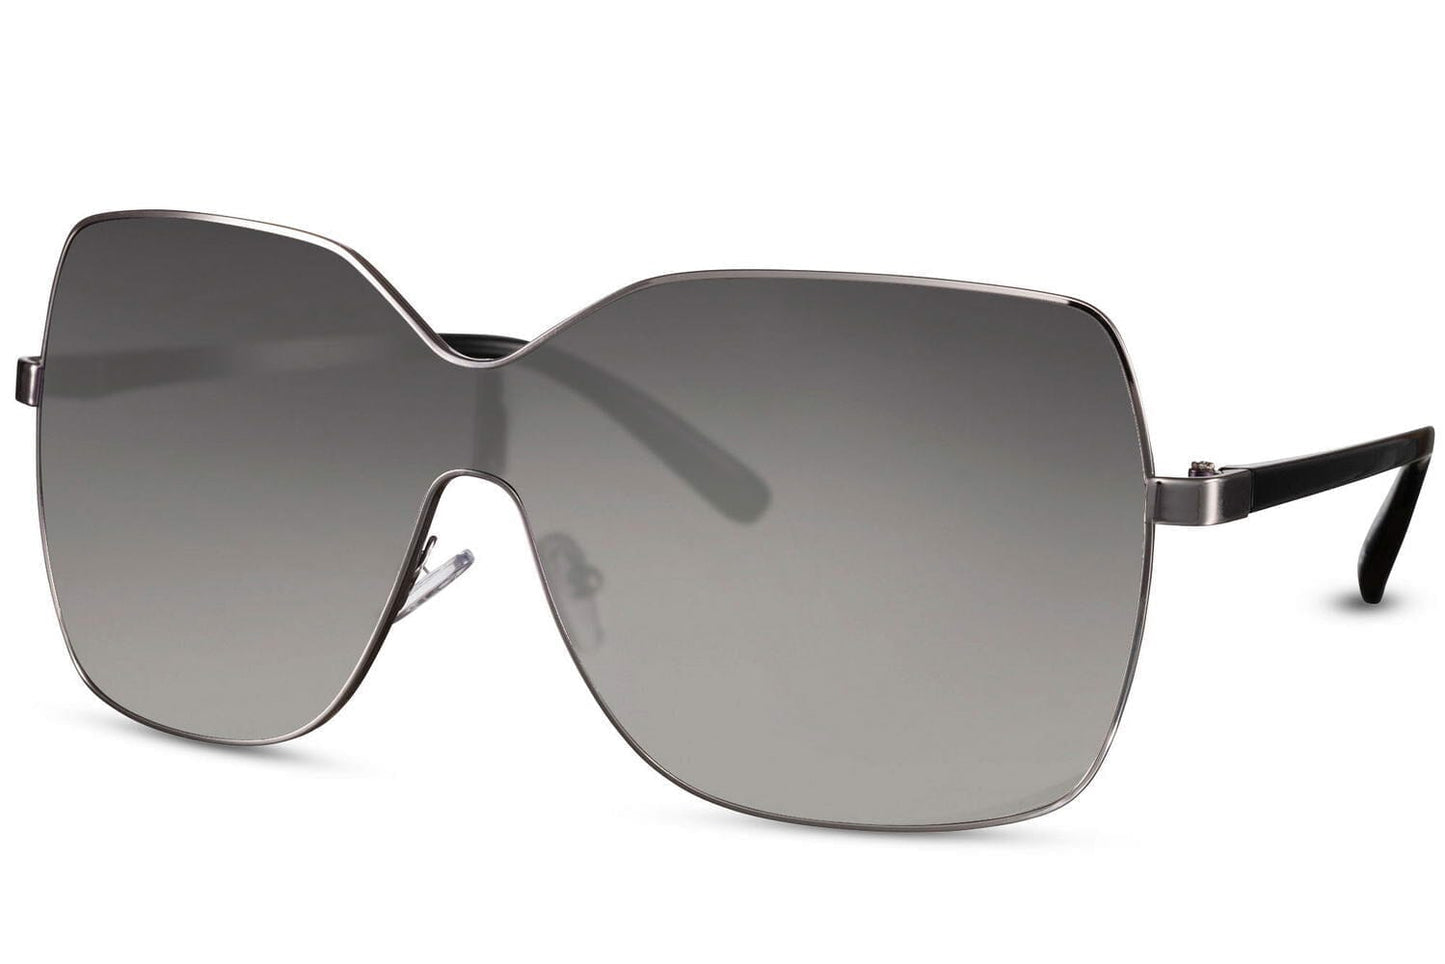 Shield sunglasses. UV400 protected. Metal frames. Grey lenses.